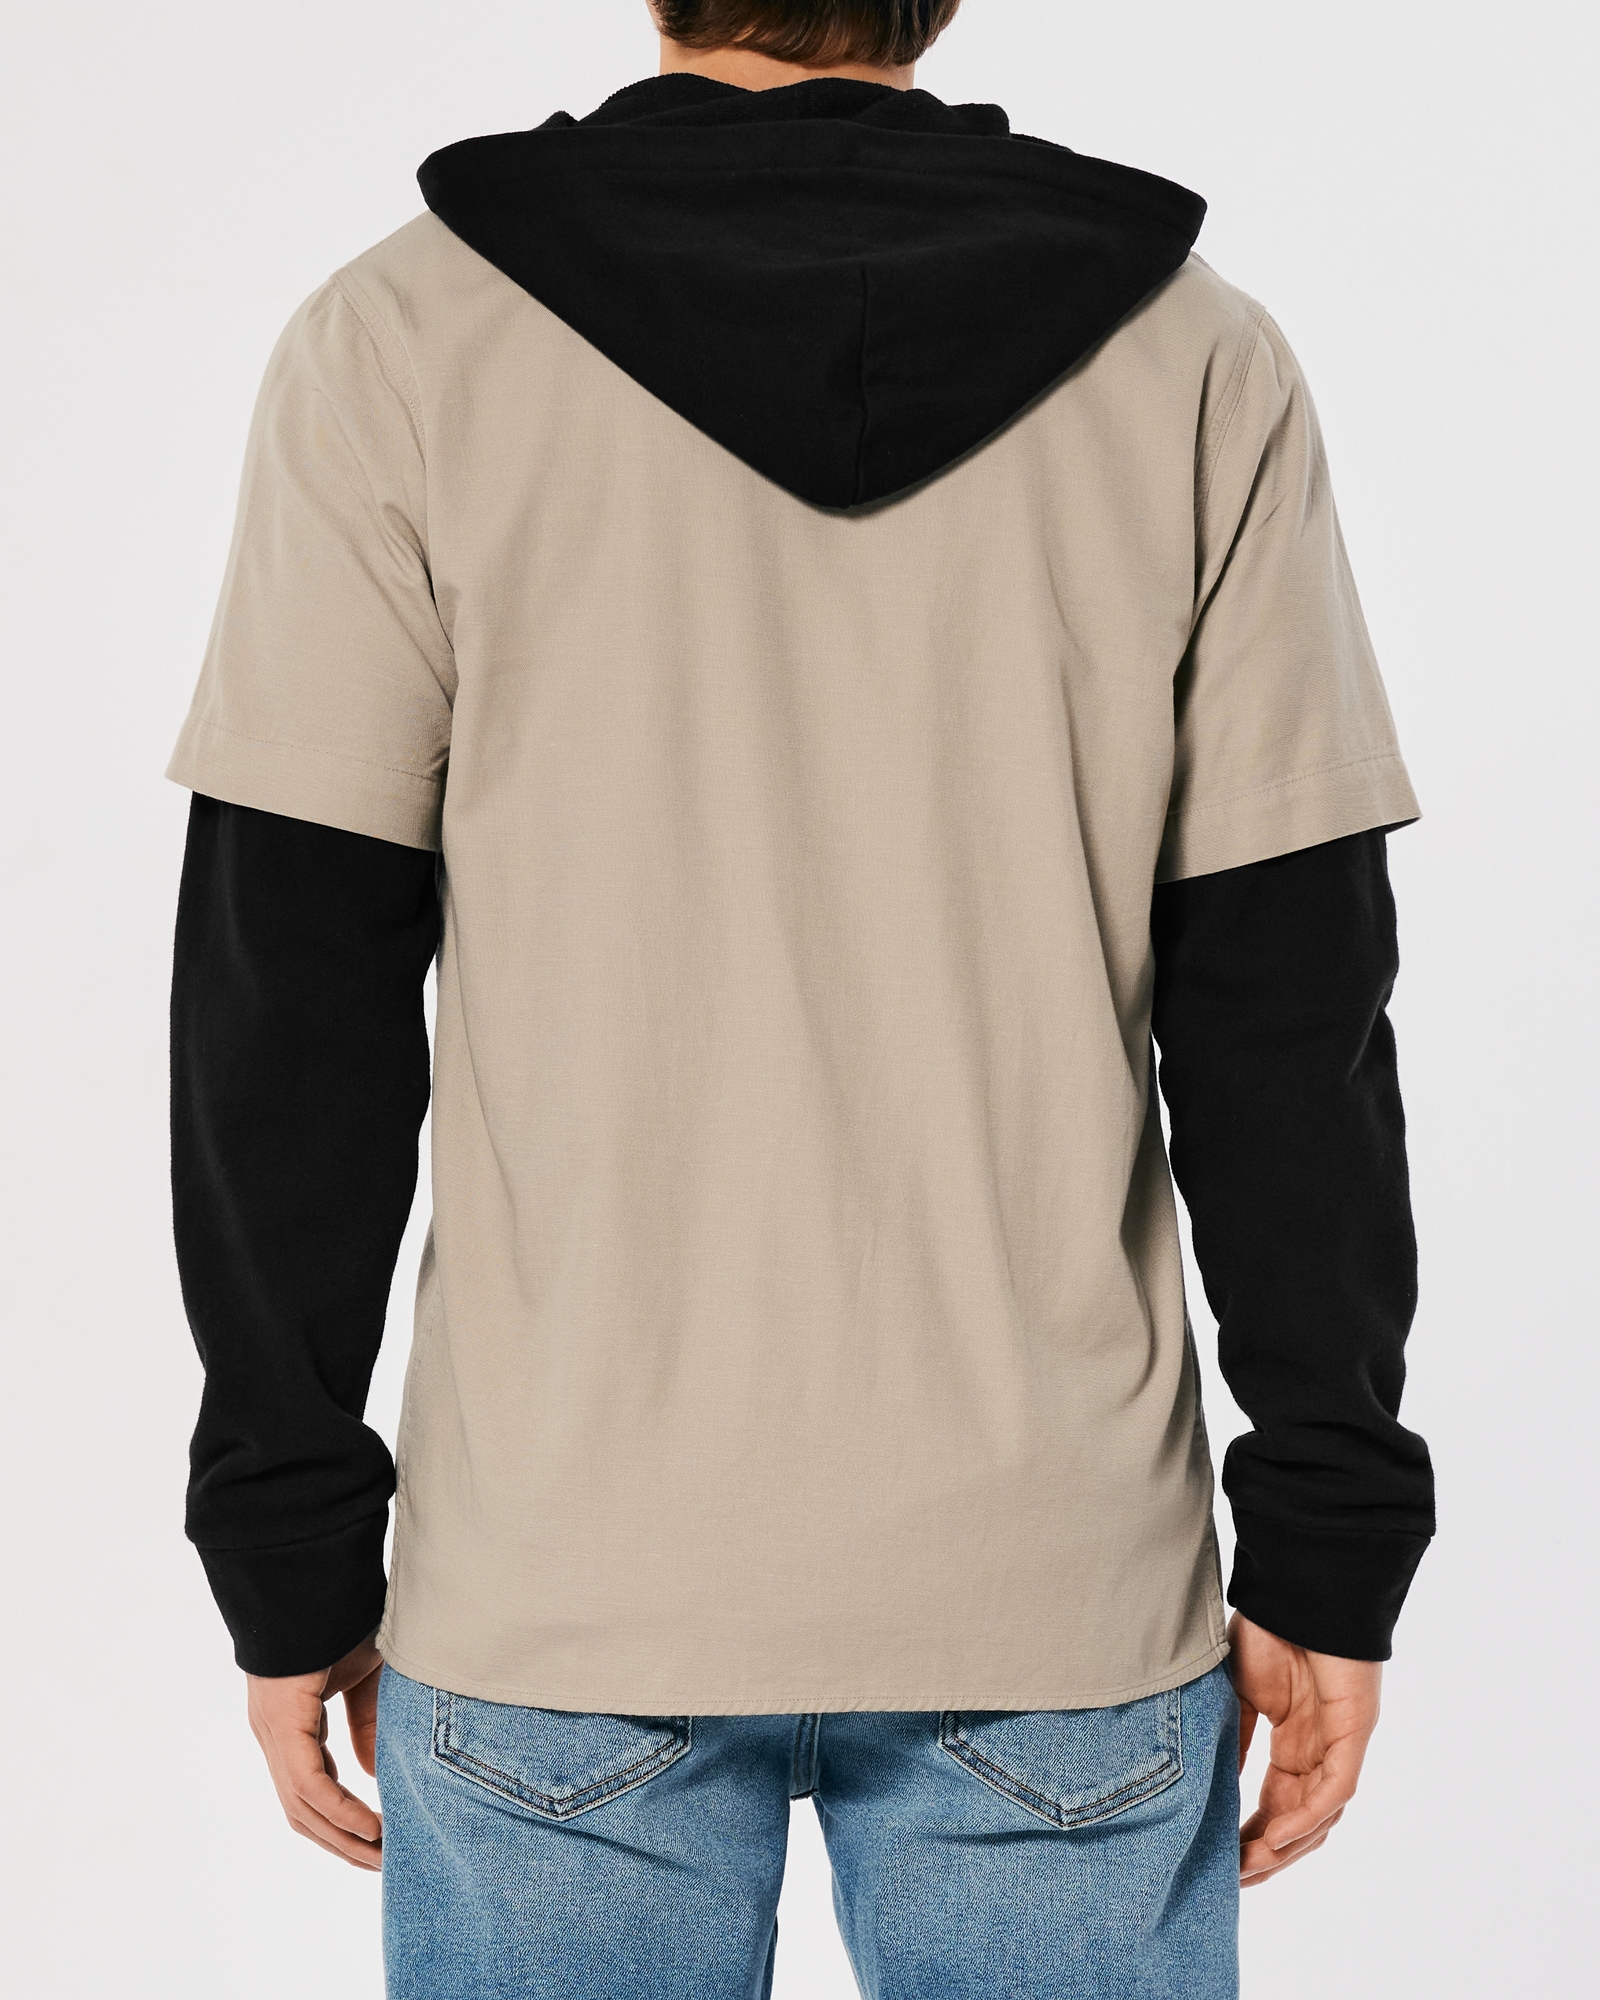 Hollister California spliced jersey hooded insert baseball shirt in  black/grey